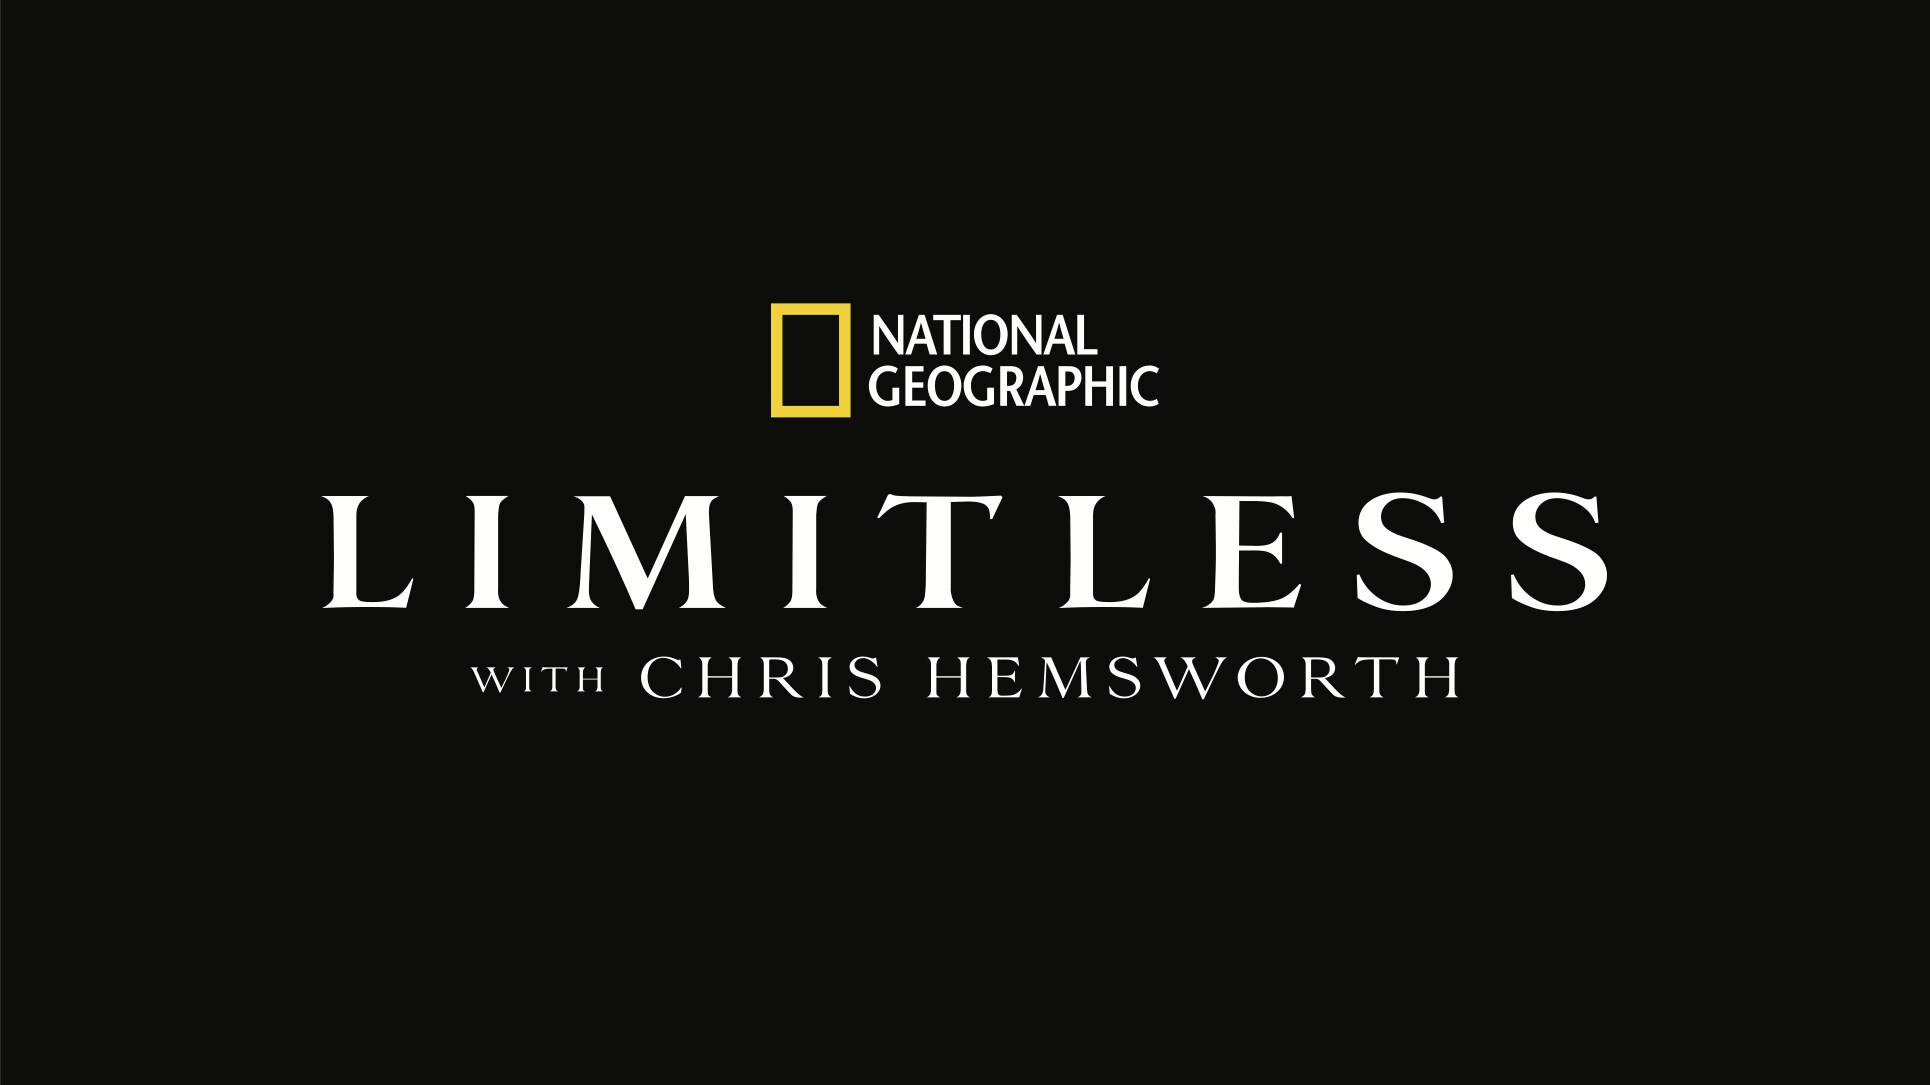 Limitless with Chris Hemsworth Logo - Black